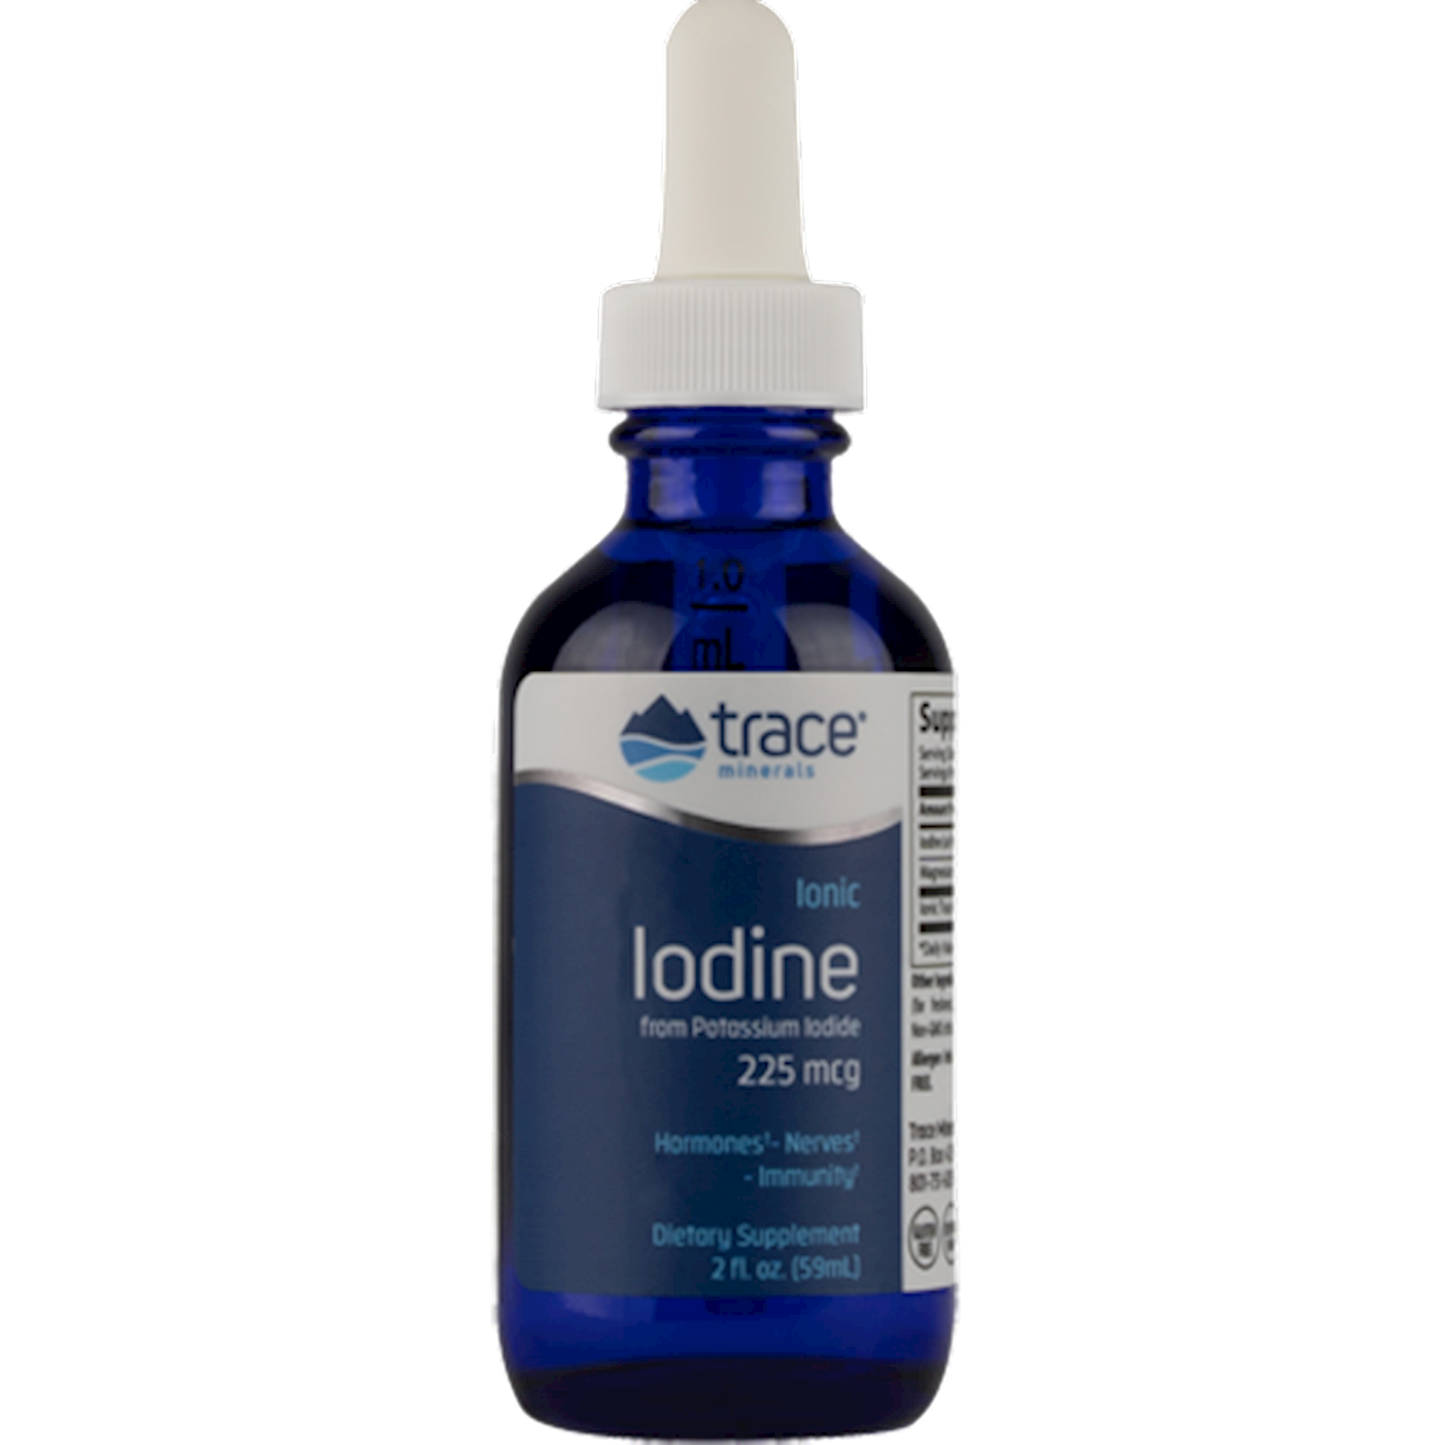 Ionic Iodine from Potassium Iodide